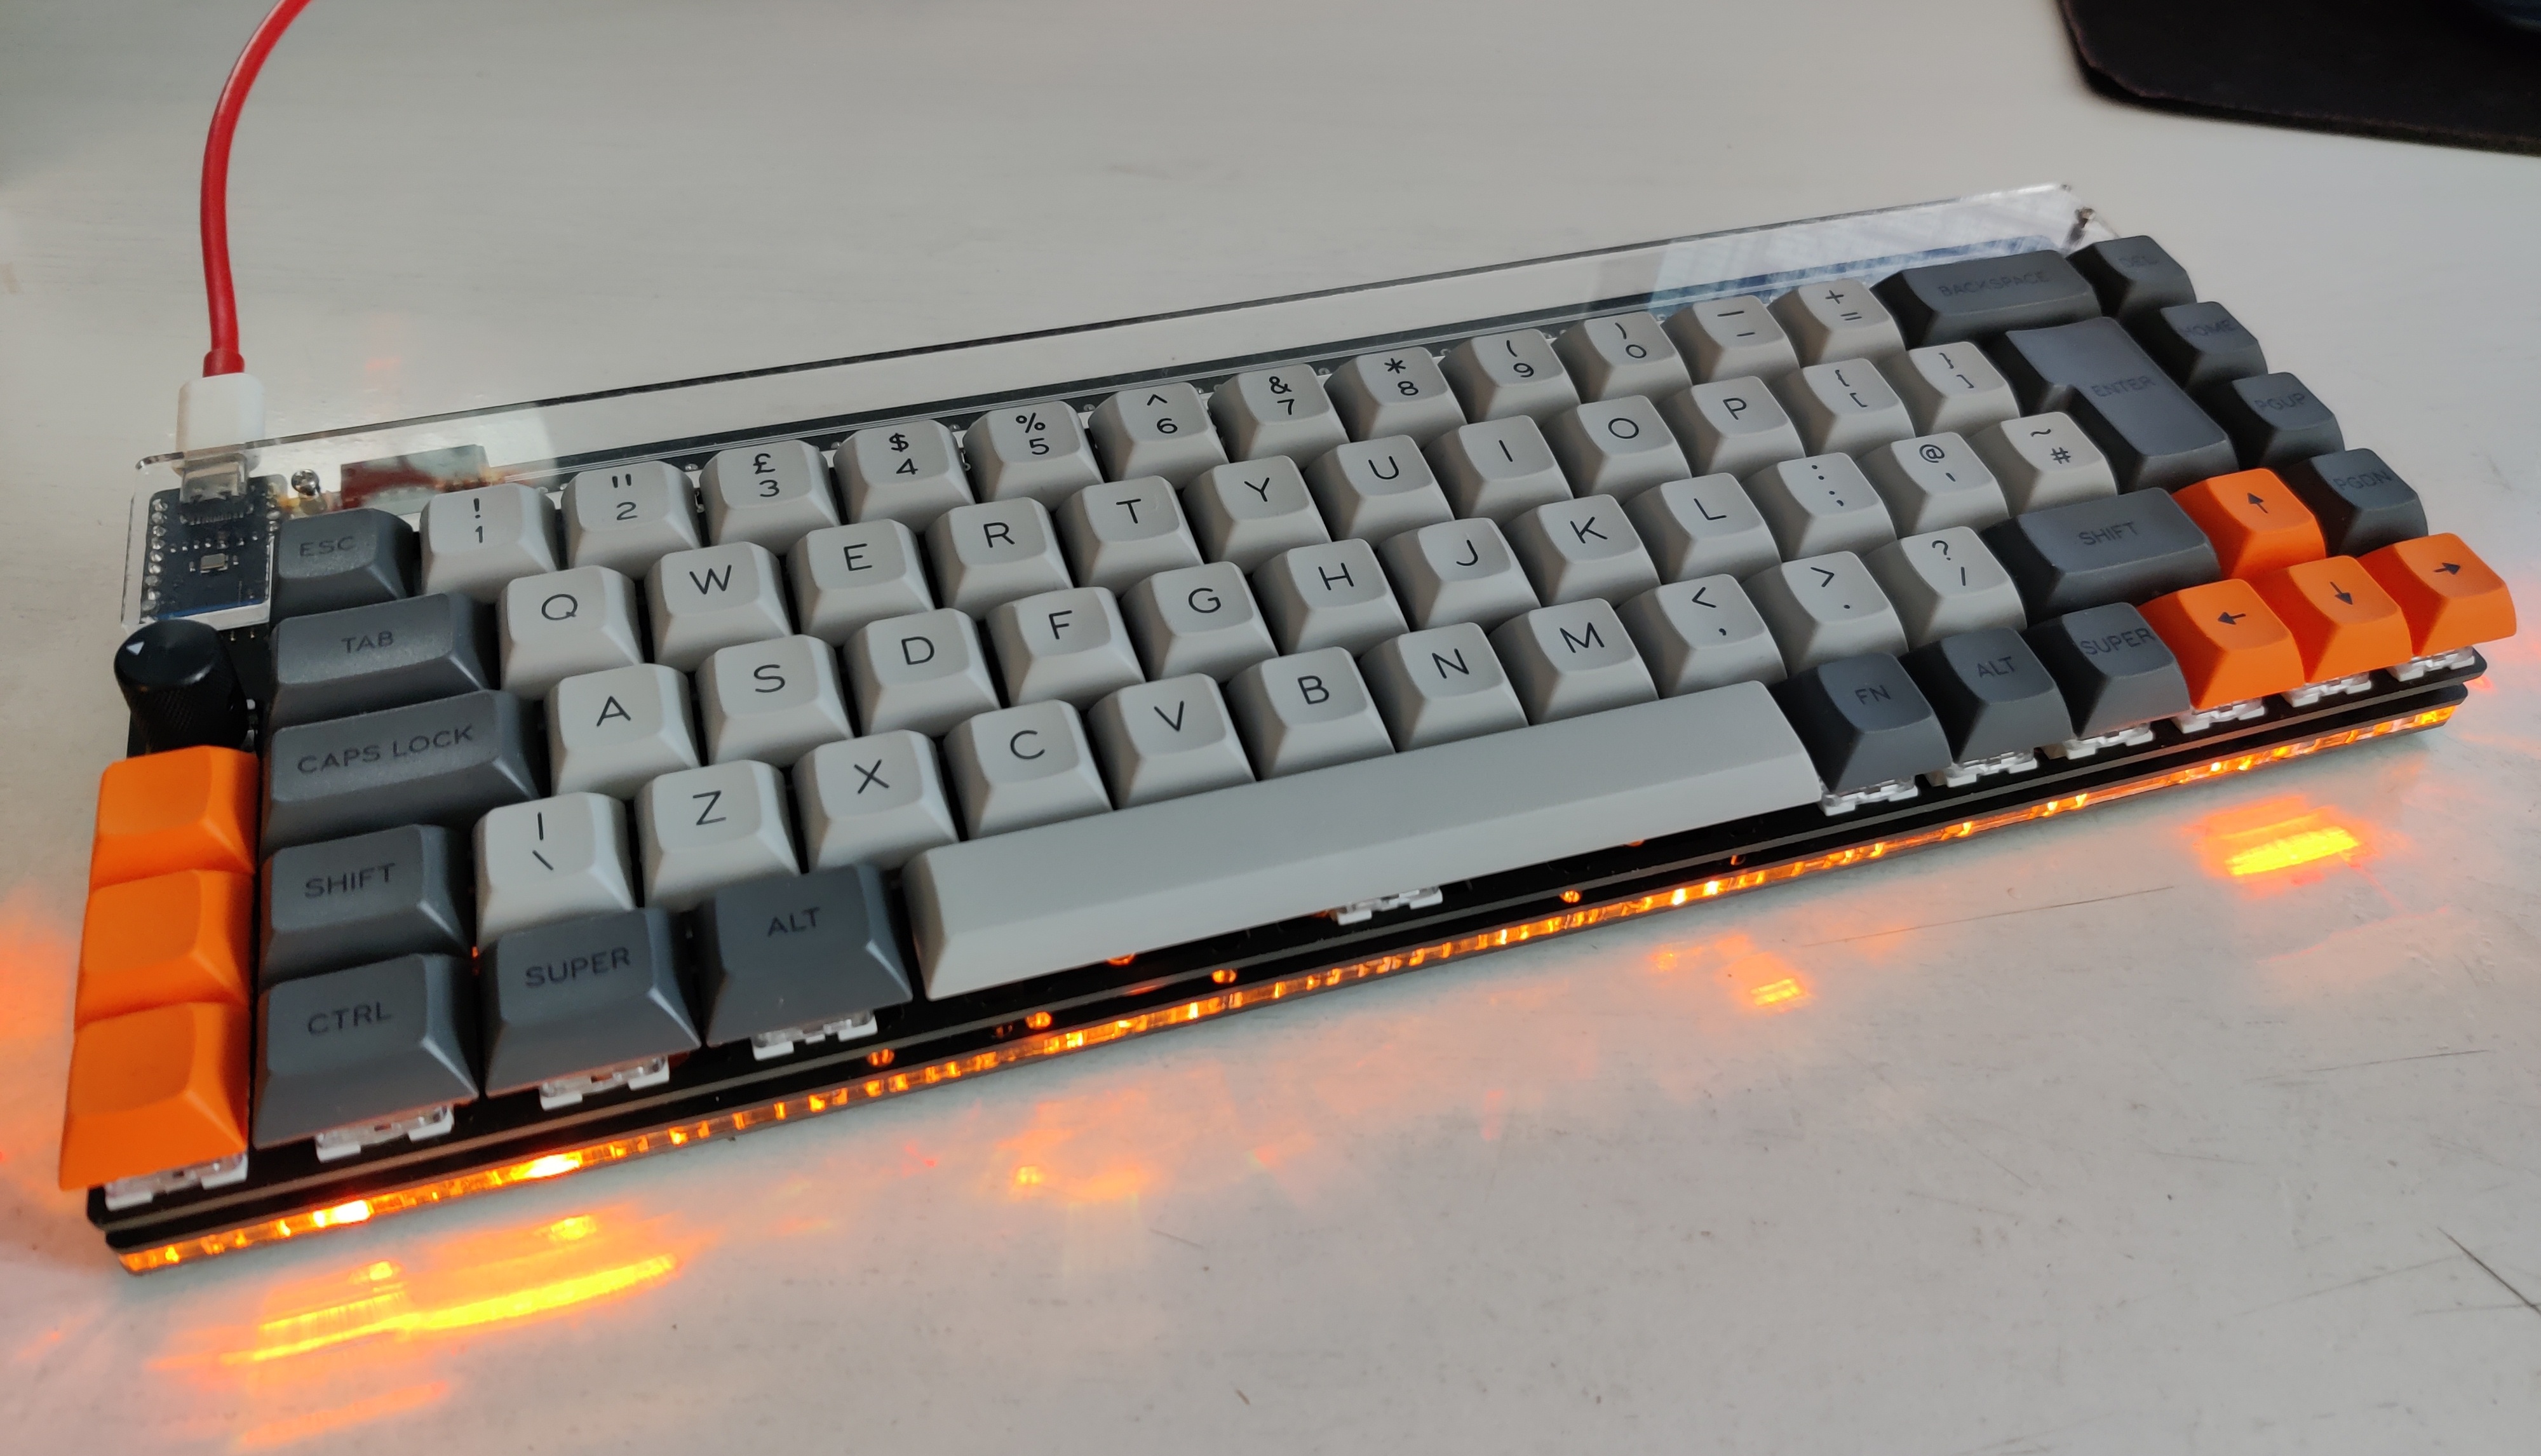 a photo of a keyboard